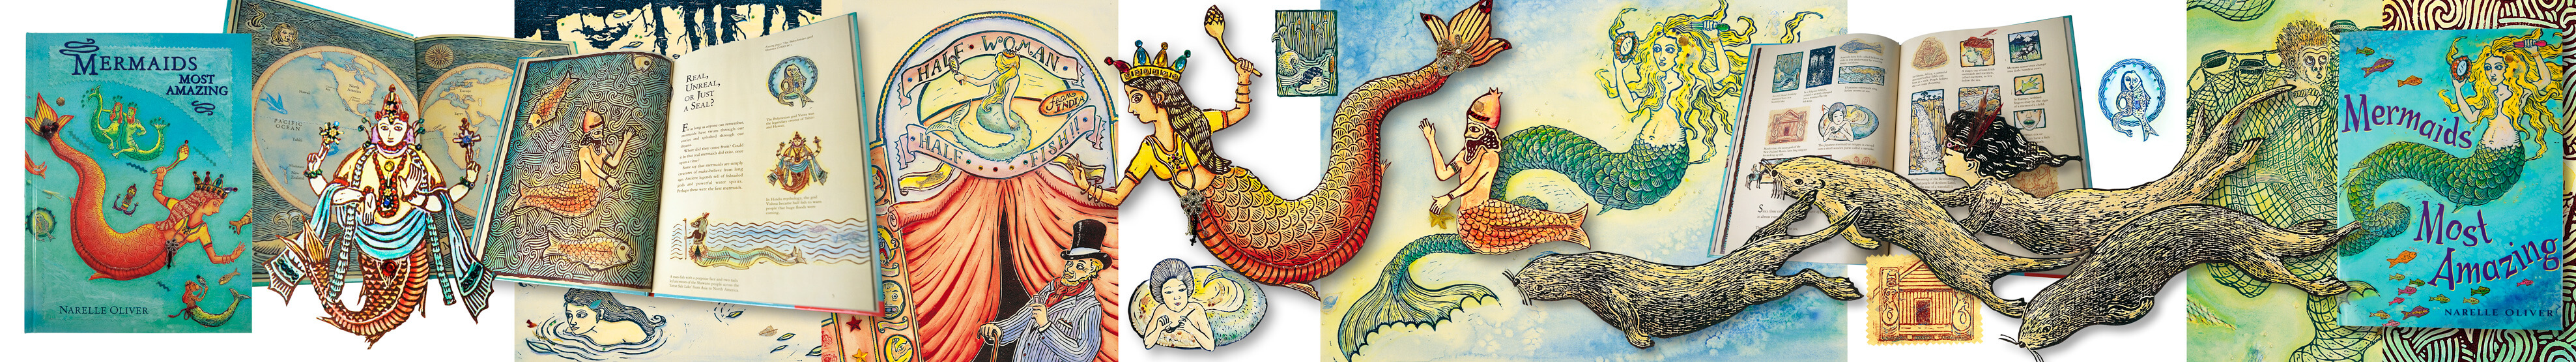 Mermaids Most Amazing – 2001